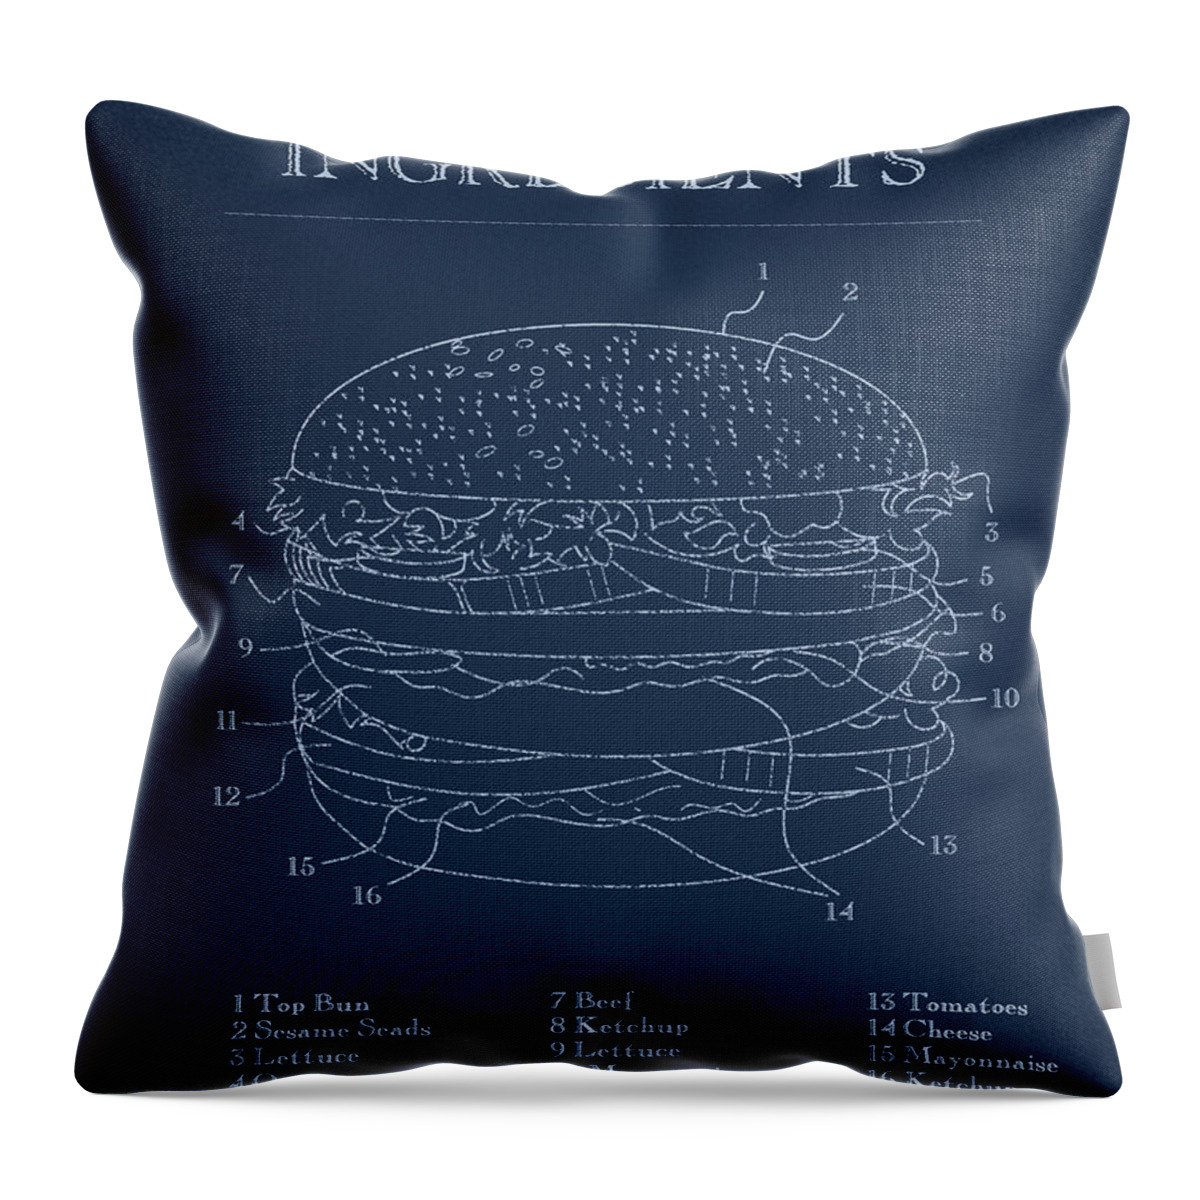 Hamburger Throw Pillow featuring the digital art Hamburger by Aged Pixel